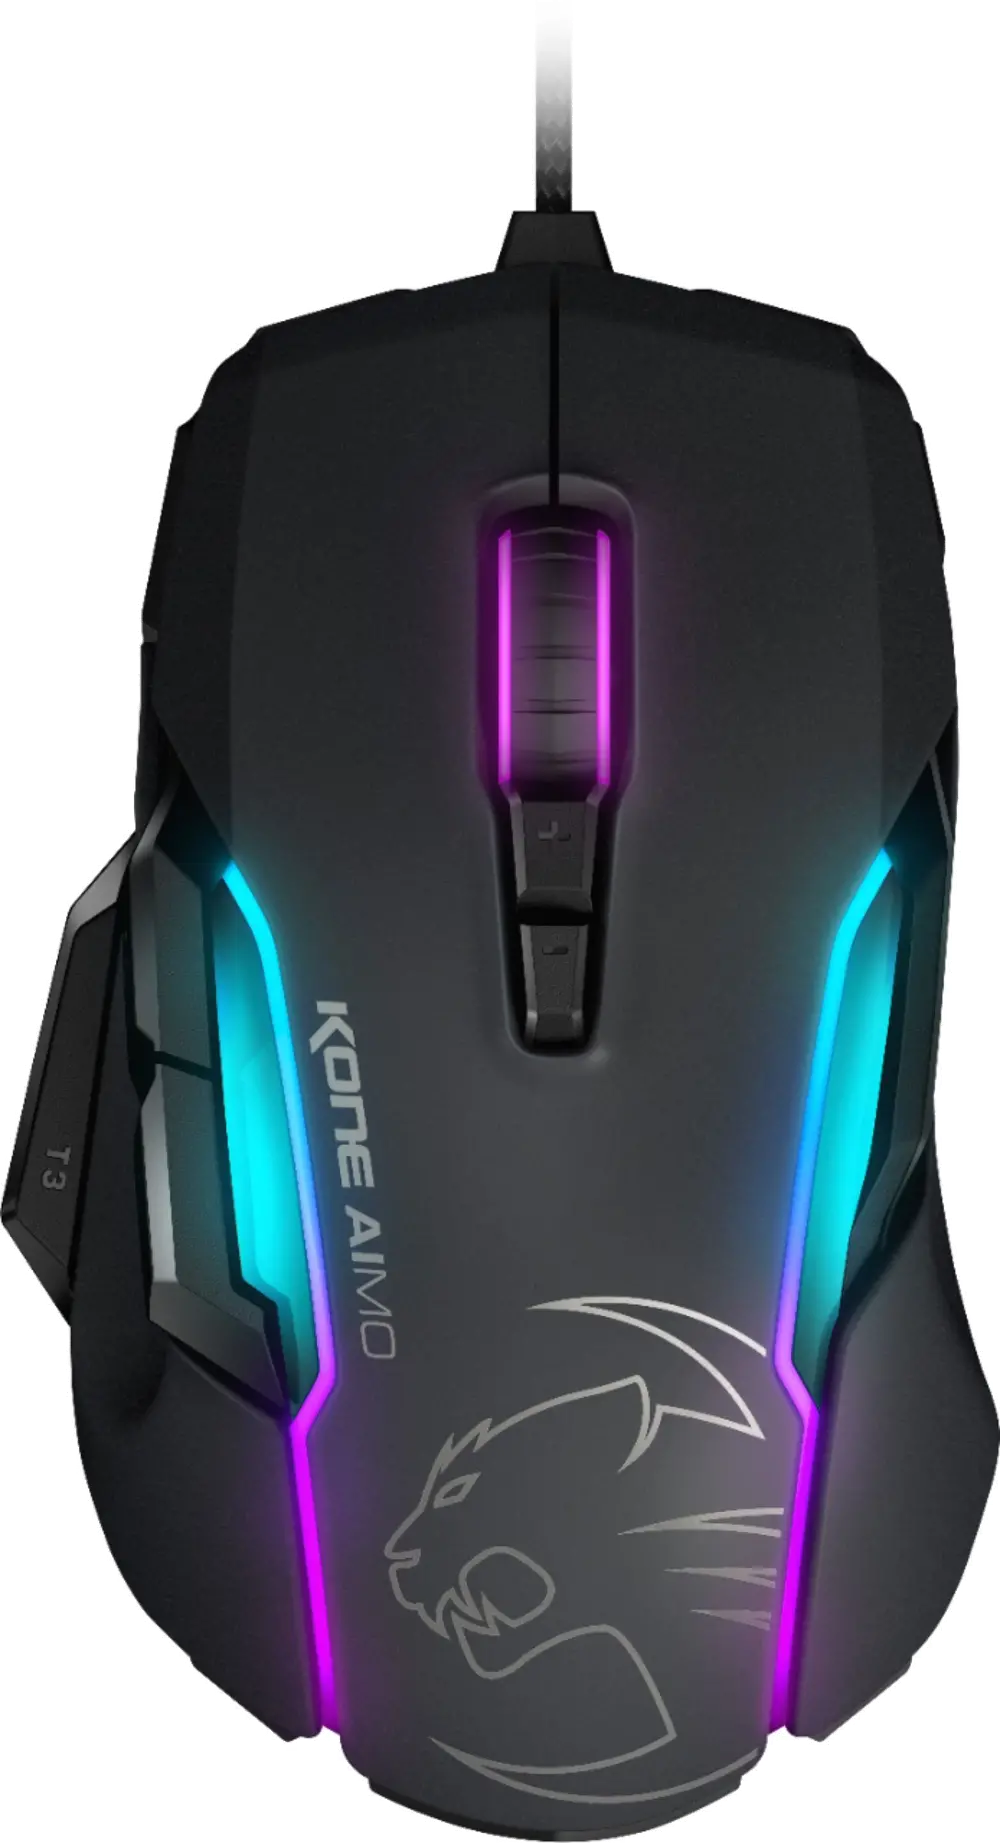 ROKKAT Kone AIMO Smart Gaming Mouse-1